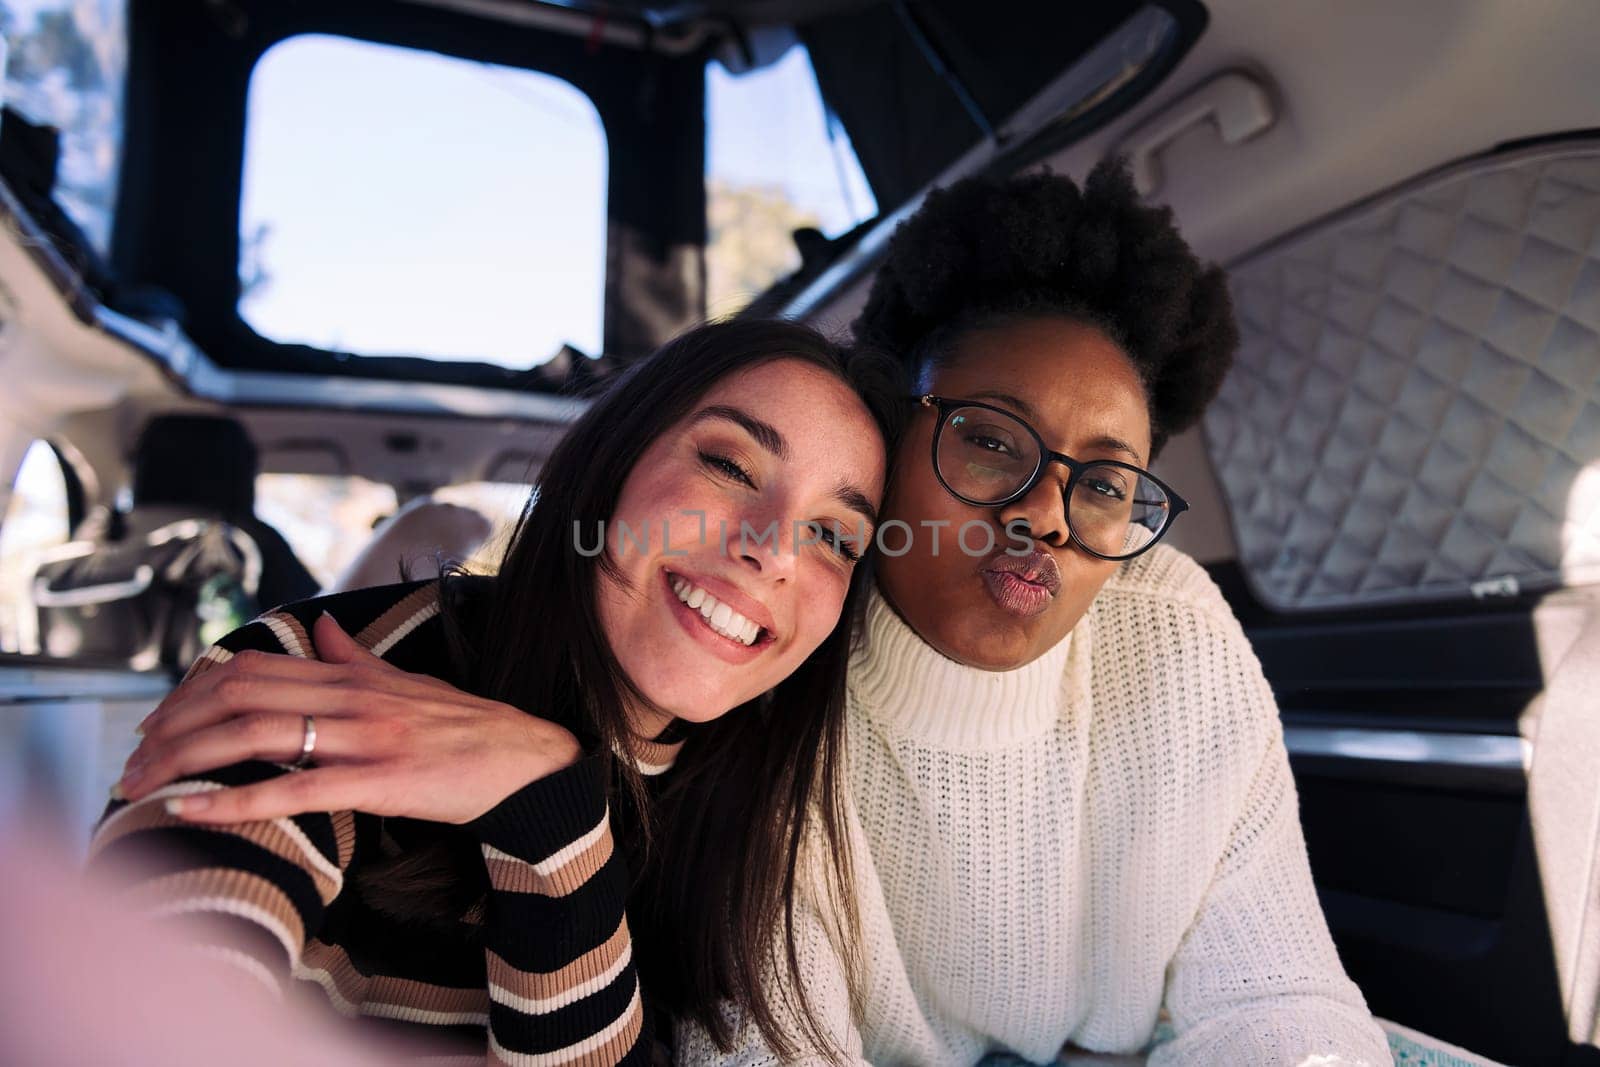 adventurous friends capturing happy moments in a camper van, concept of weekend getaway with best friend and road trip adventure